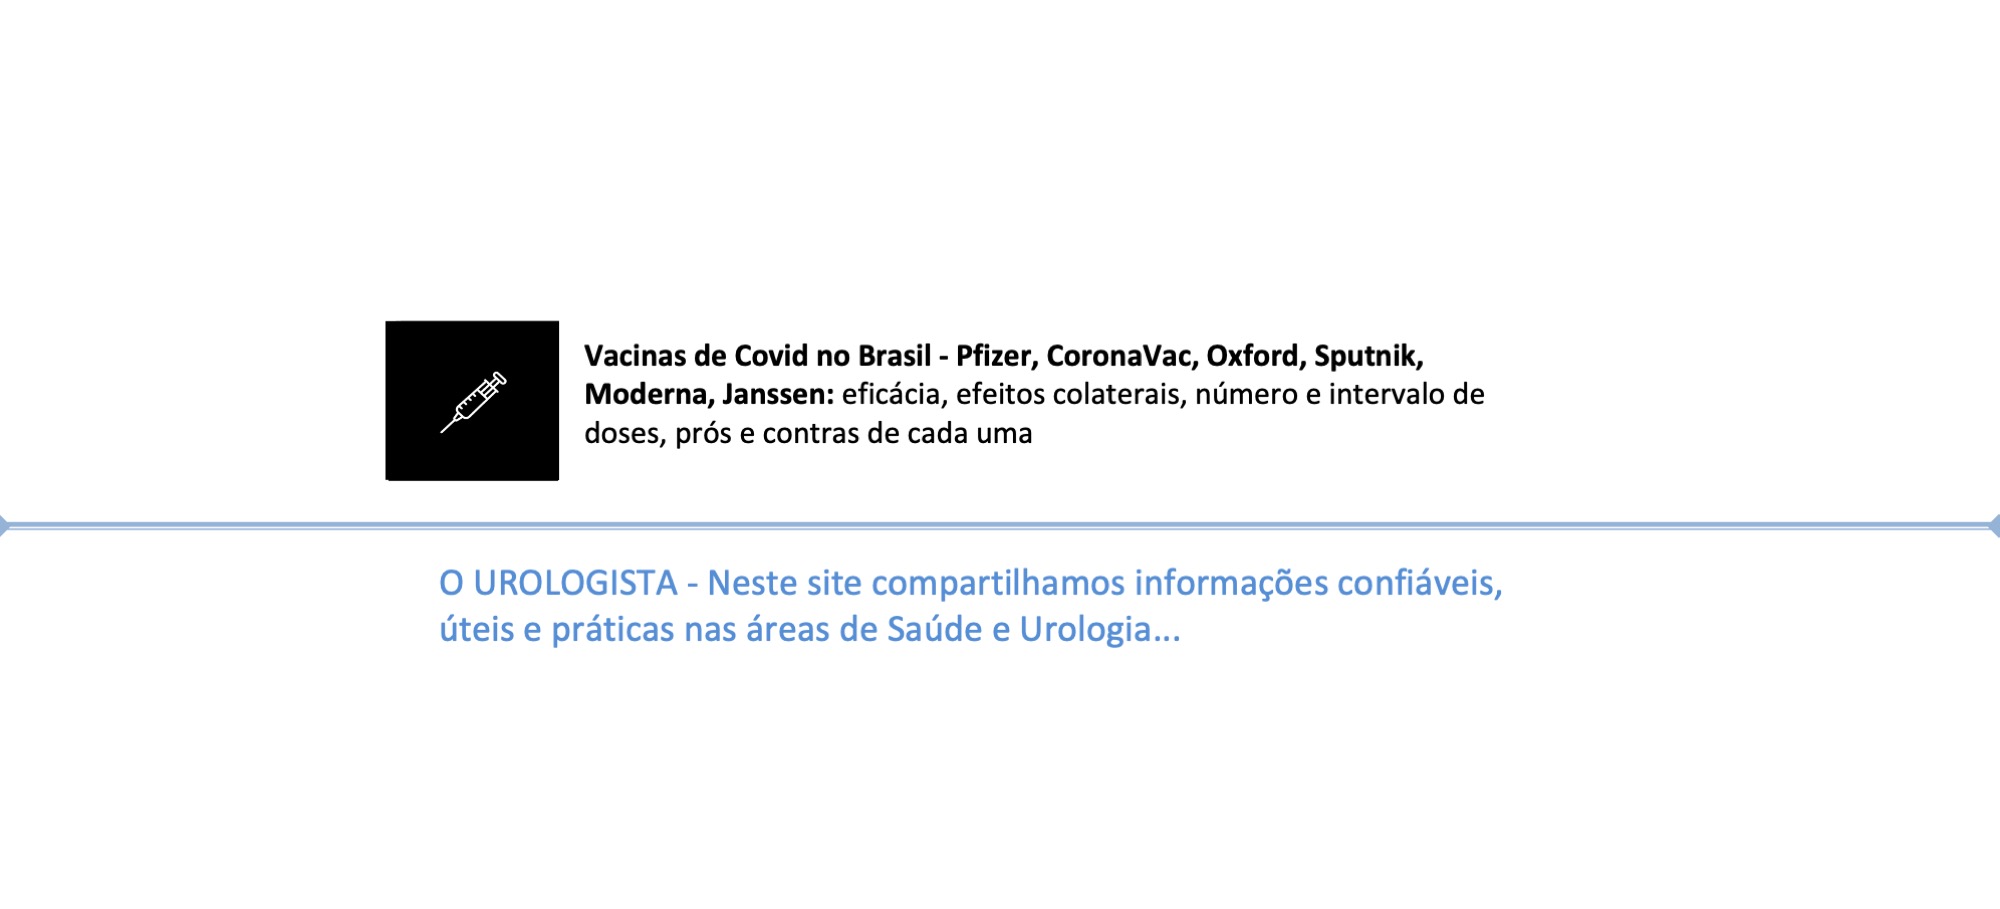 Vacinas de Covid no Brasil - Pfizer, Coronavac, Oxford, Sputnik, Moderna e Janssen